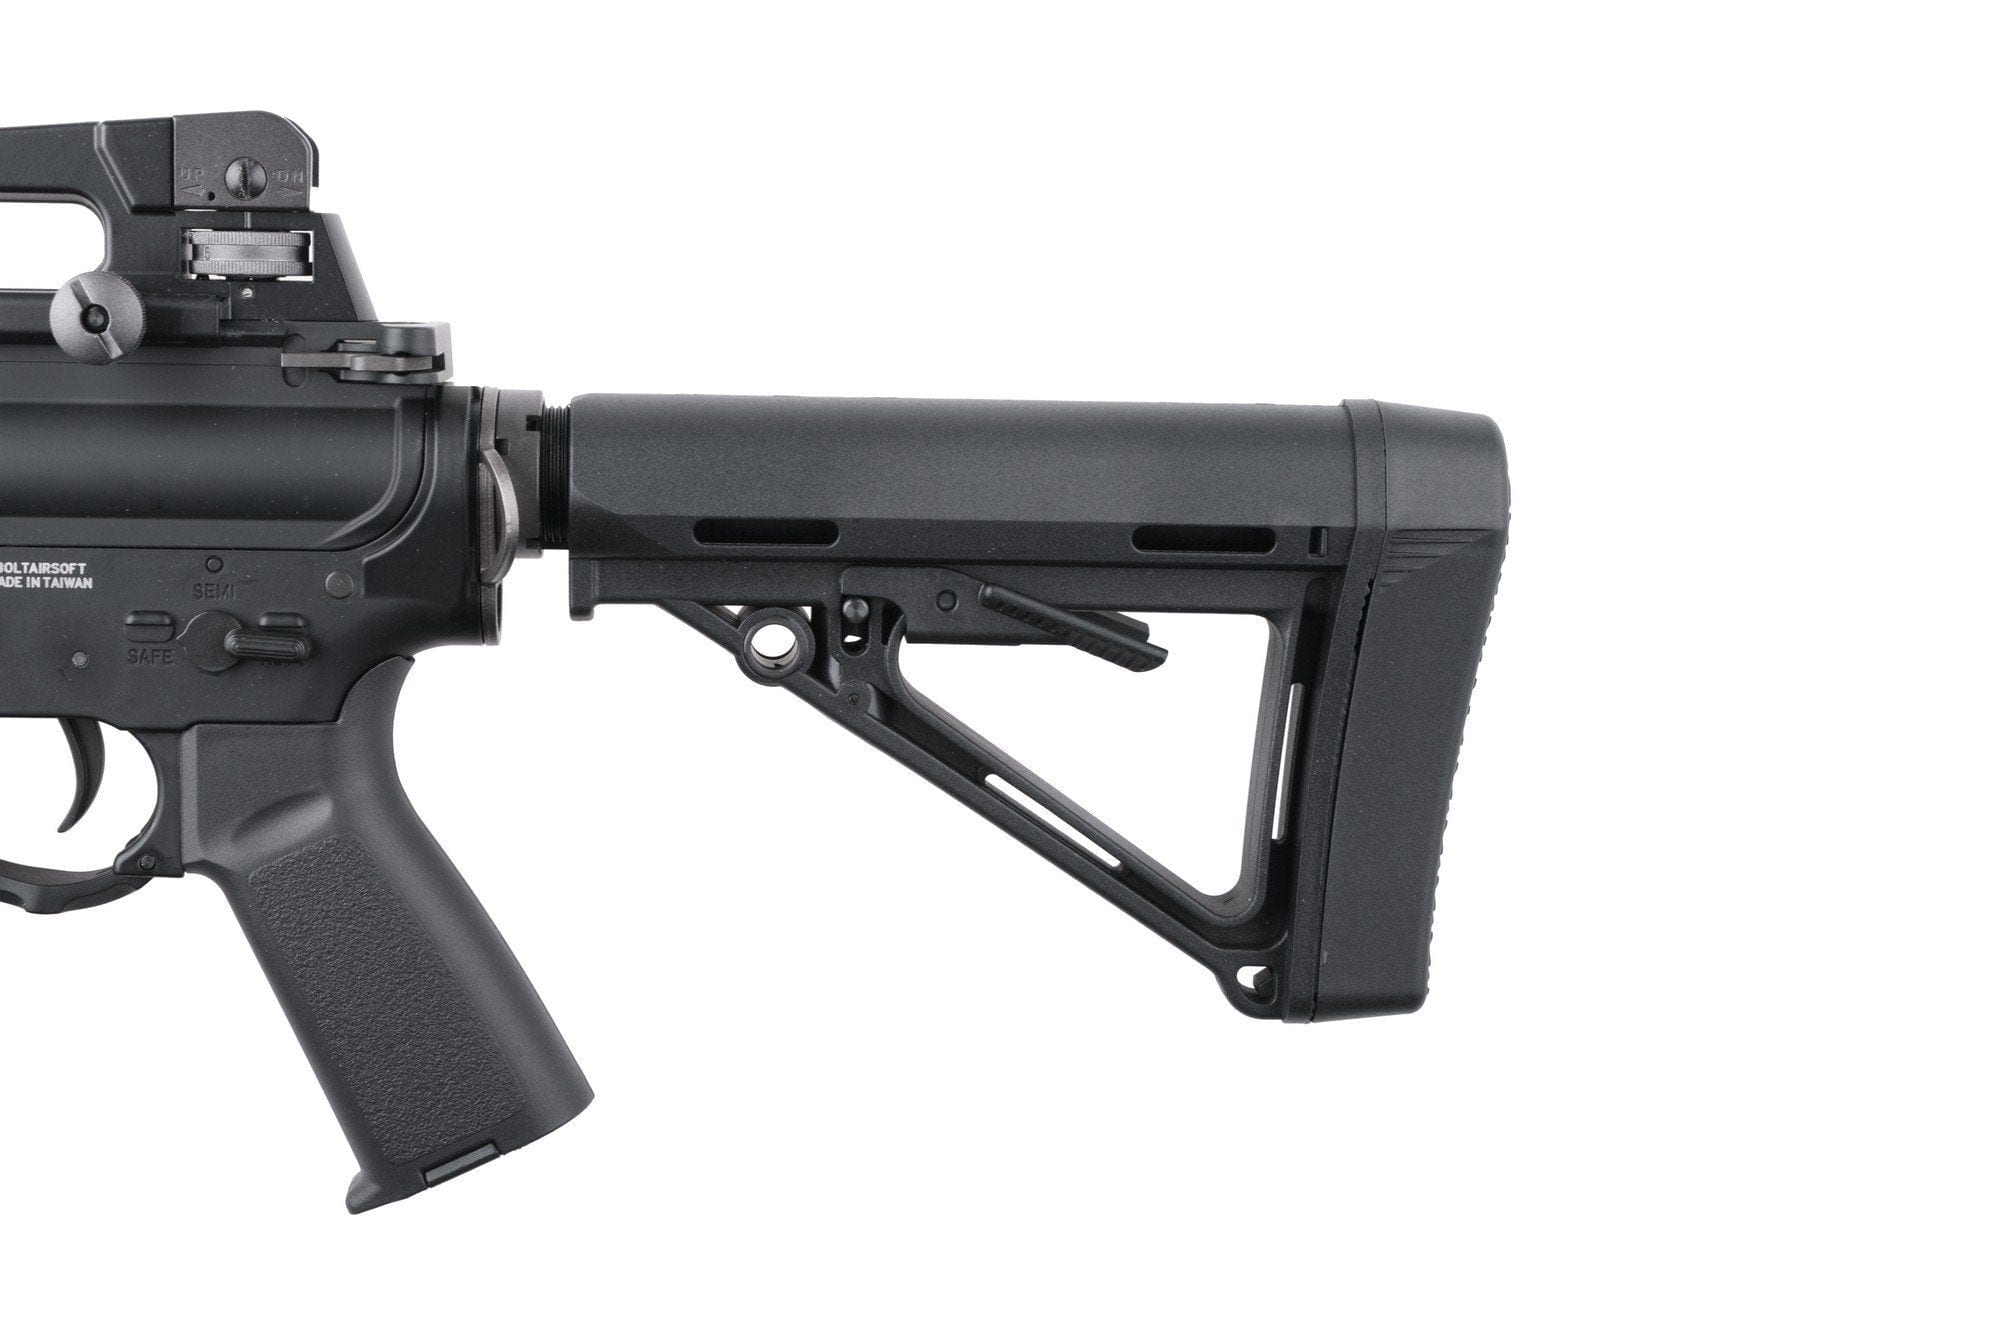 B4A1 ELITE DX (B.R.S.S.) Carbine Replica - Black